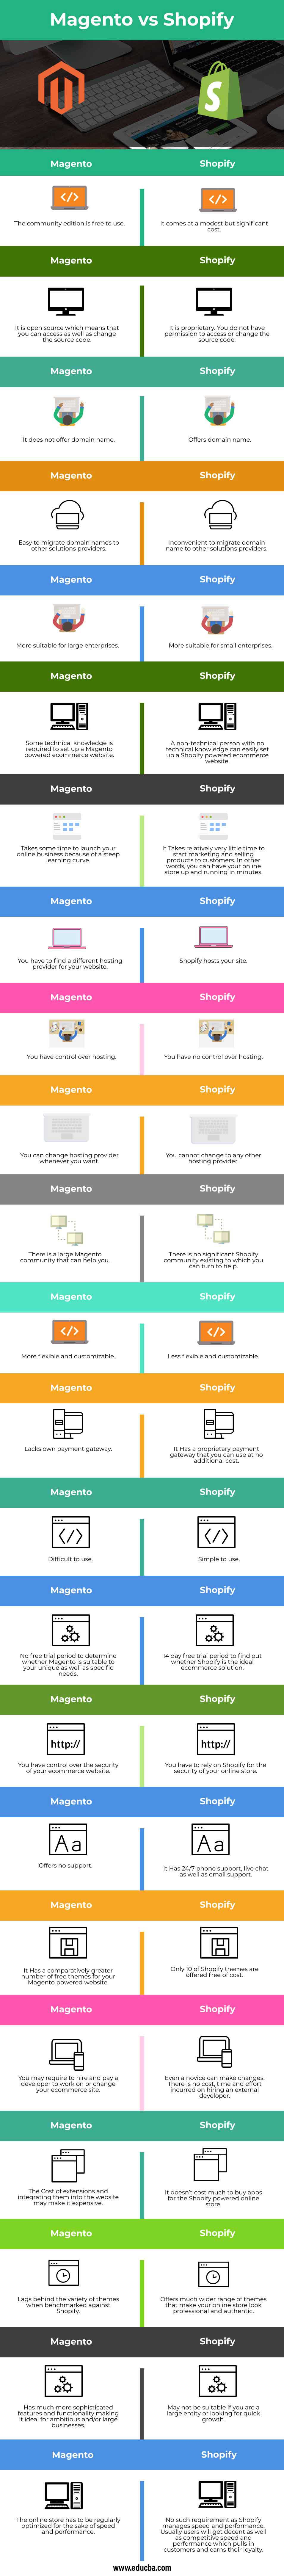 Magento vs Shopify info